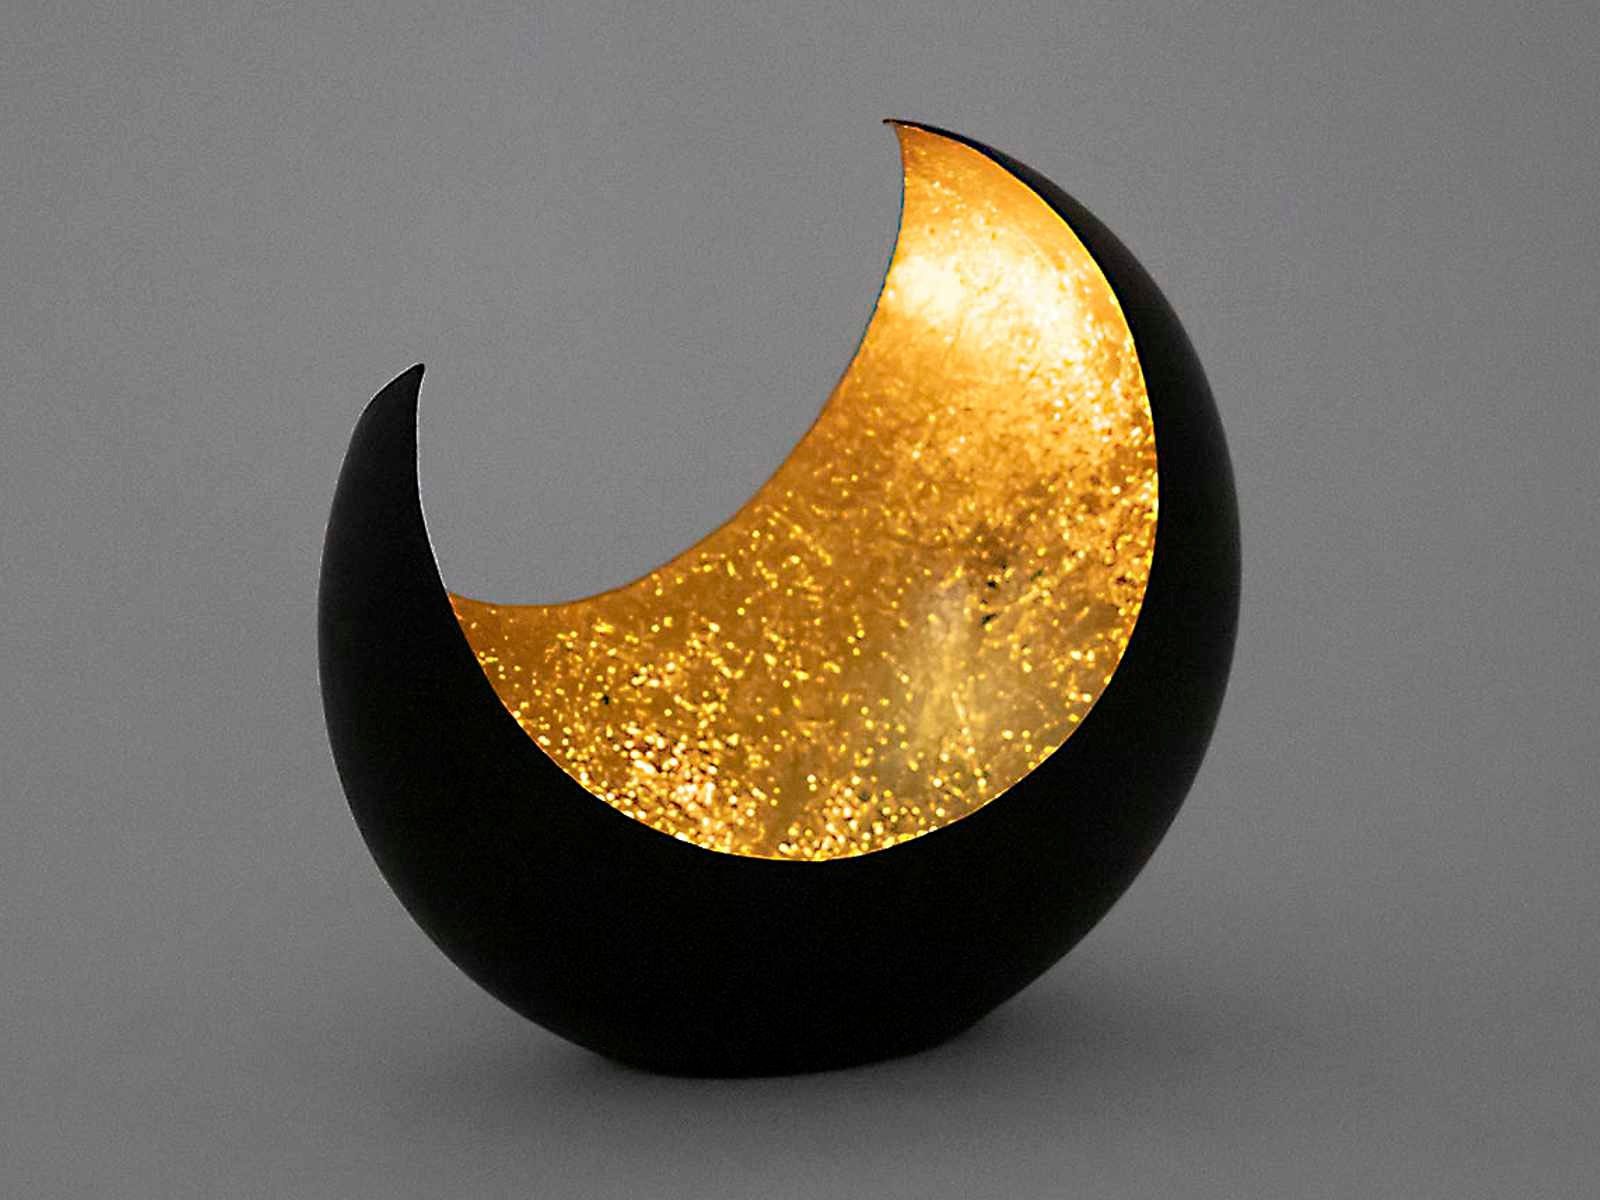 schwarz St) Teelichthalter Kerzenhalter Kerzenständer Casamia Sichelform (1 matt Kerzenhalter Moon